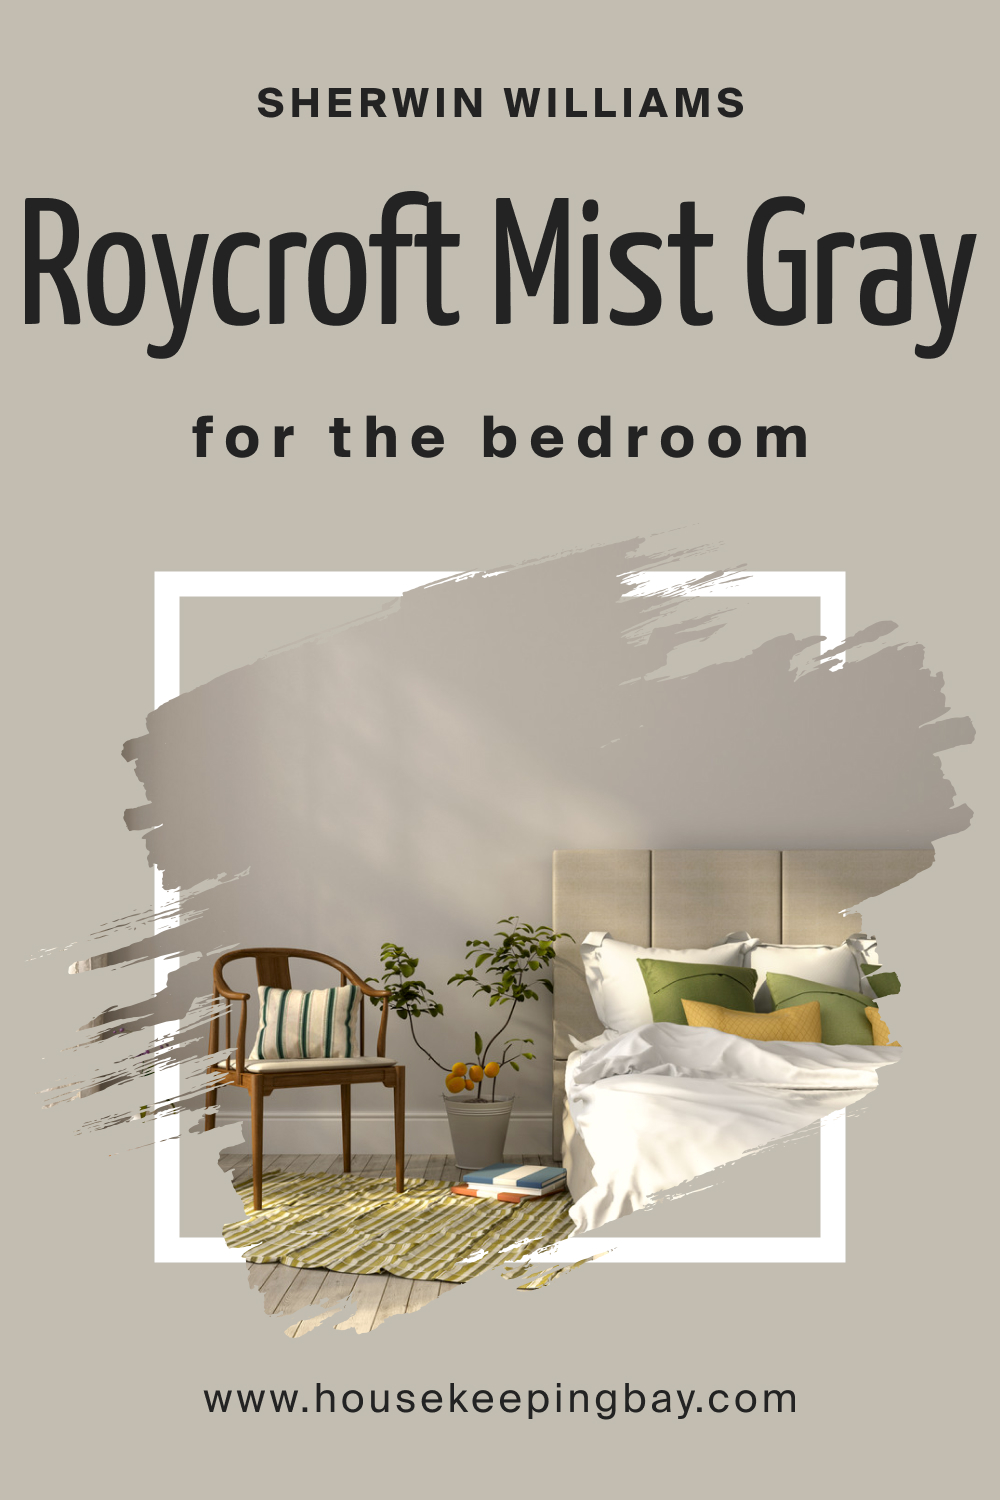 Sherwin Williams. SW 2844 Roycroft Mist Gray For the bedroom